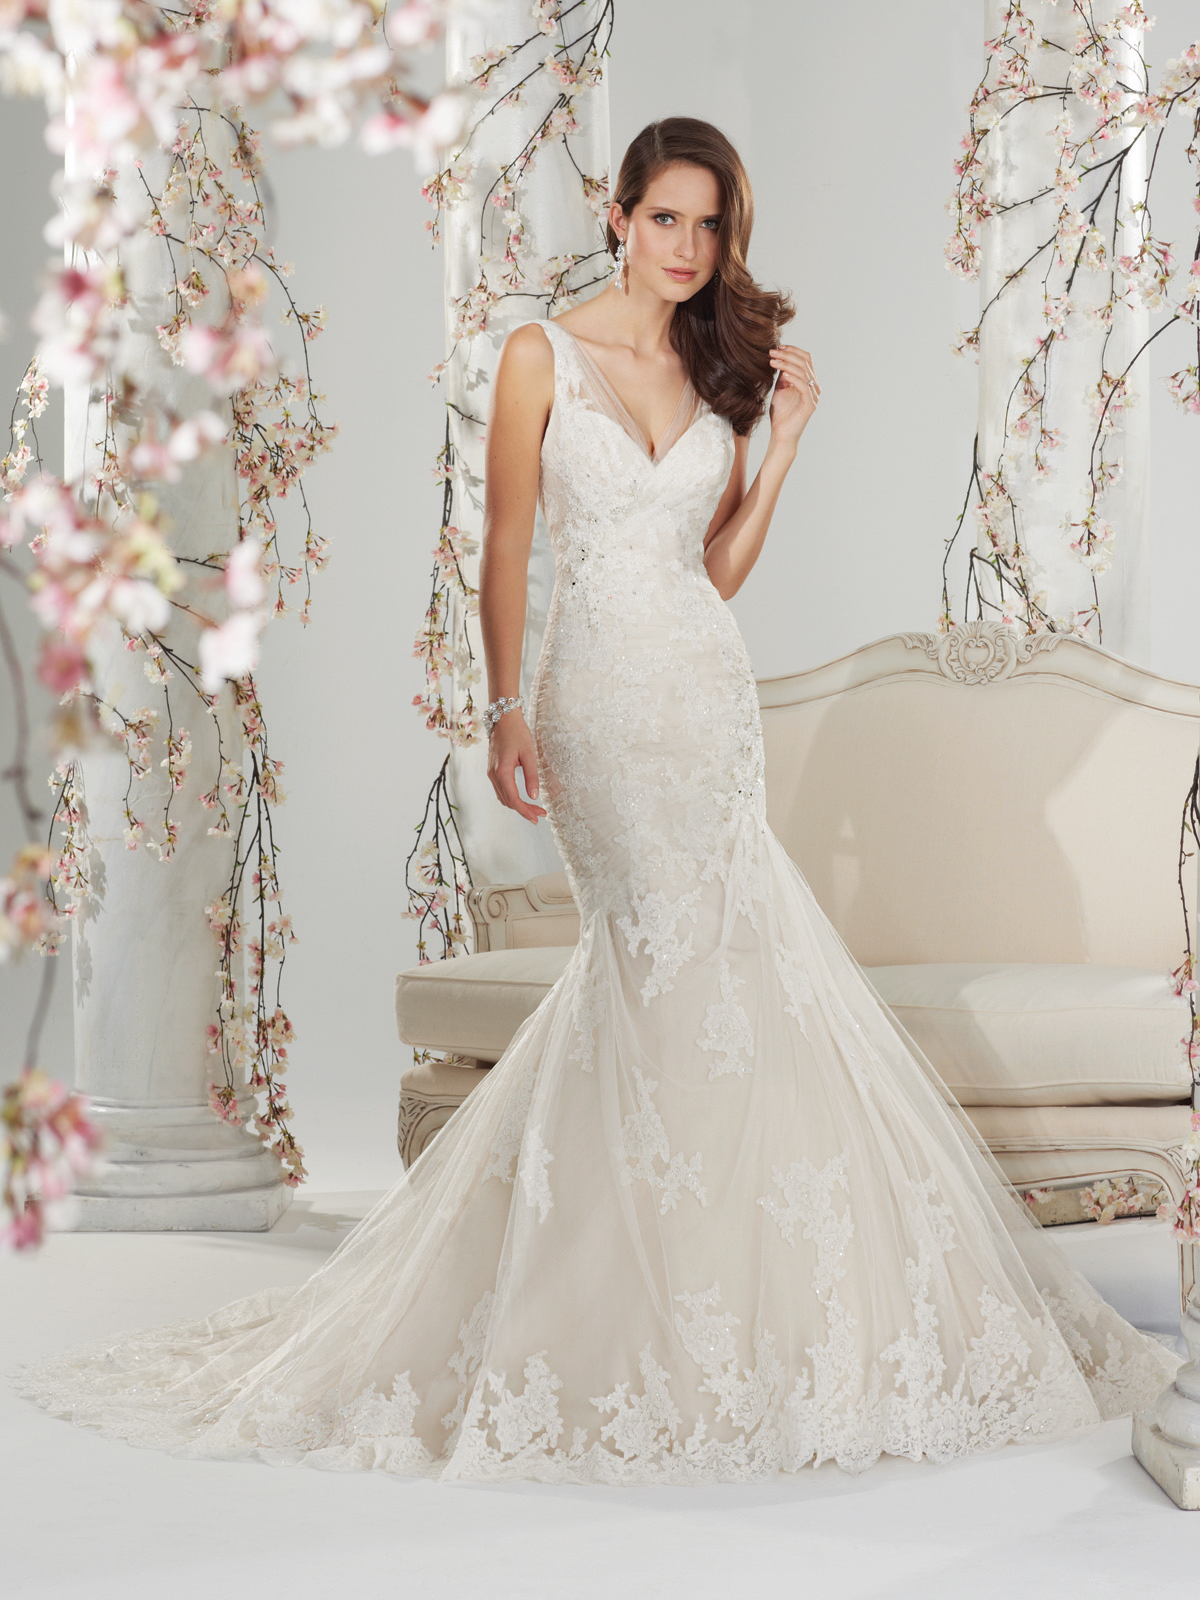 Wedding Dress - Sophia Tolli SPRING 2014 Collection - Y11400 Margaery ...